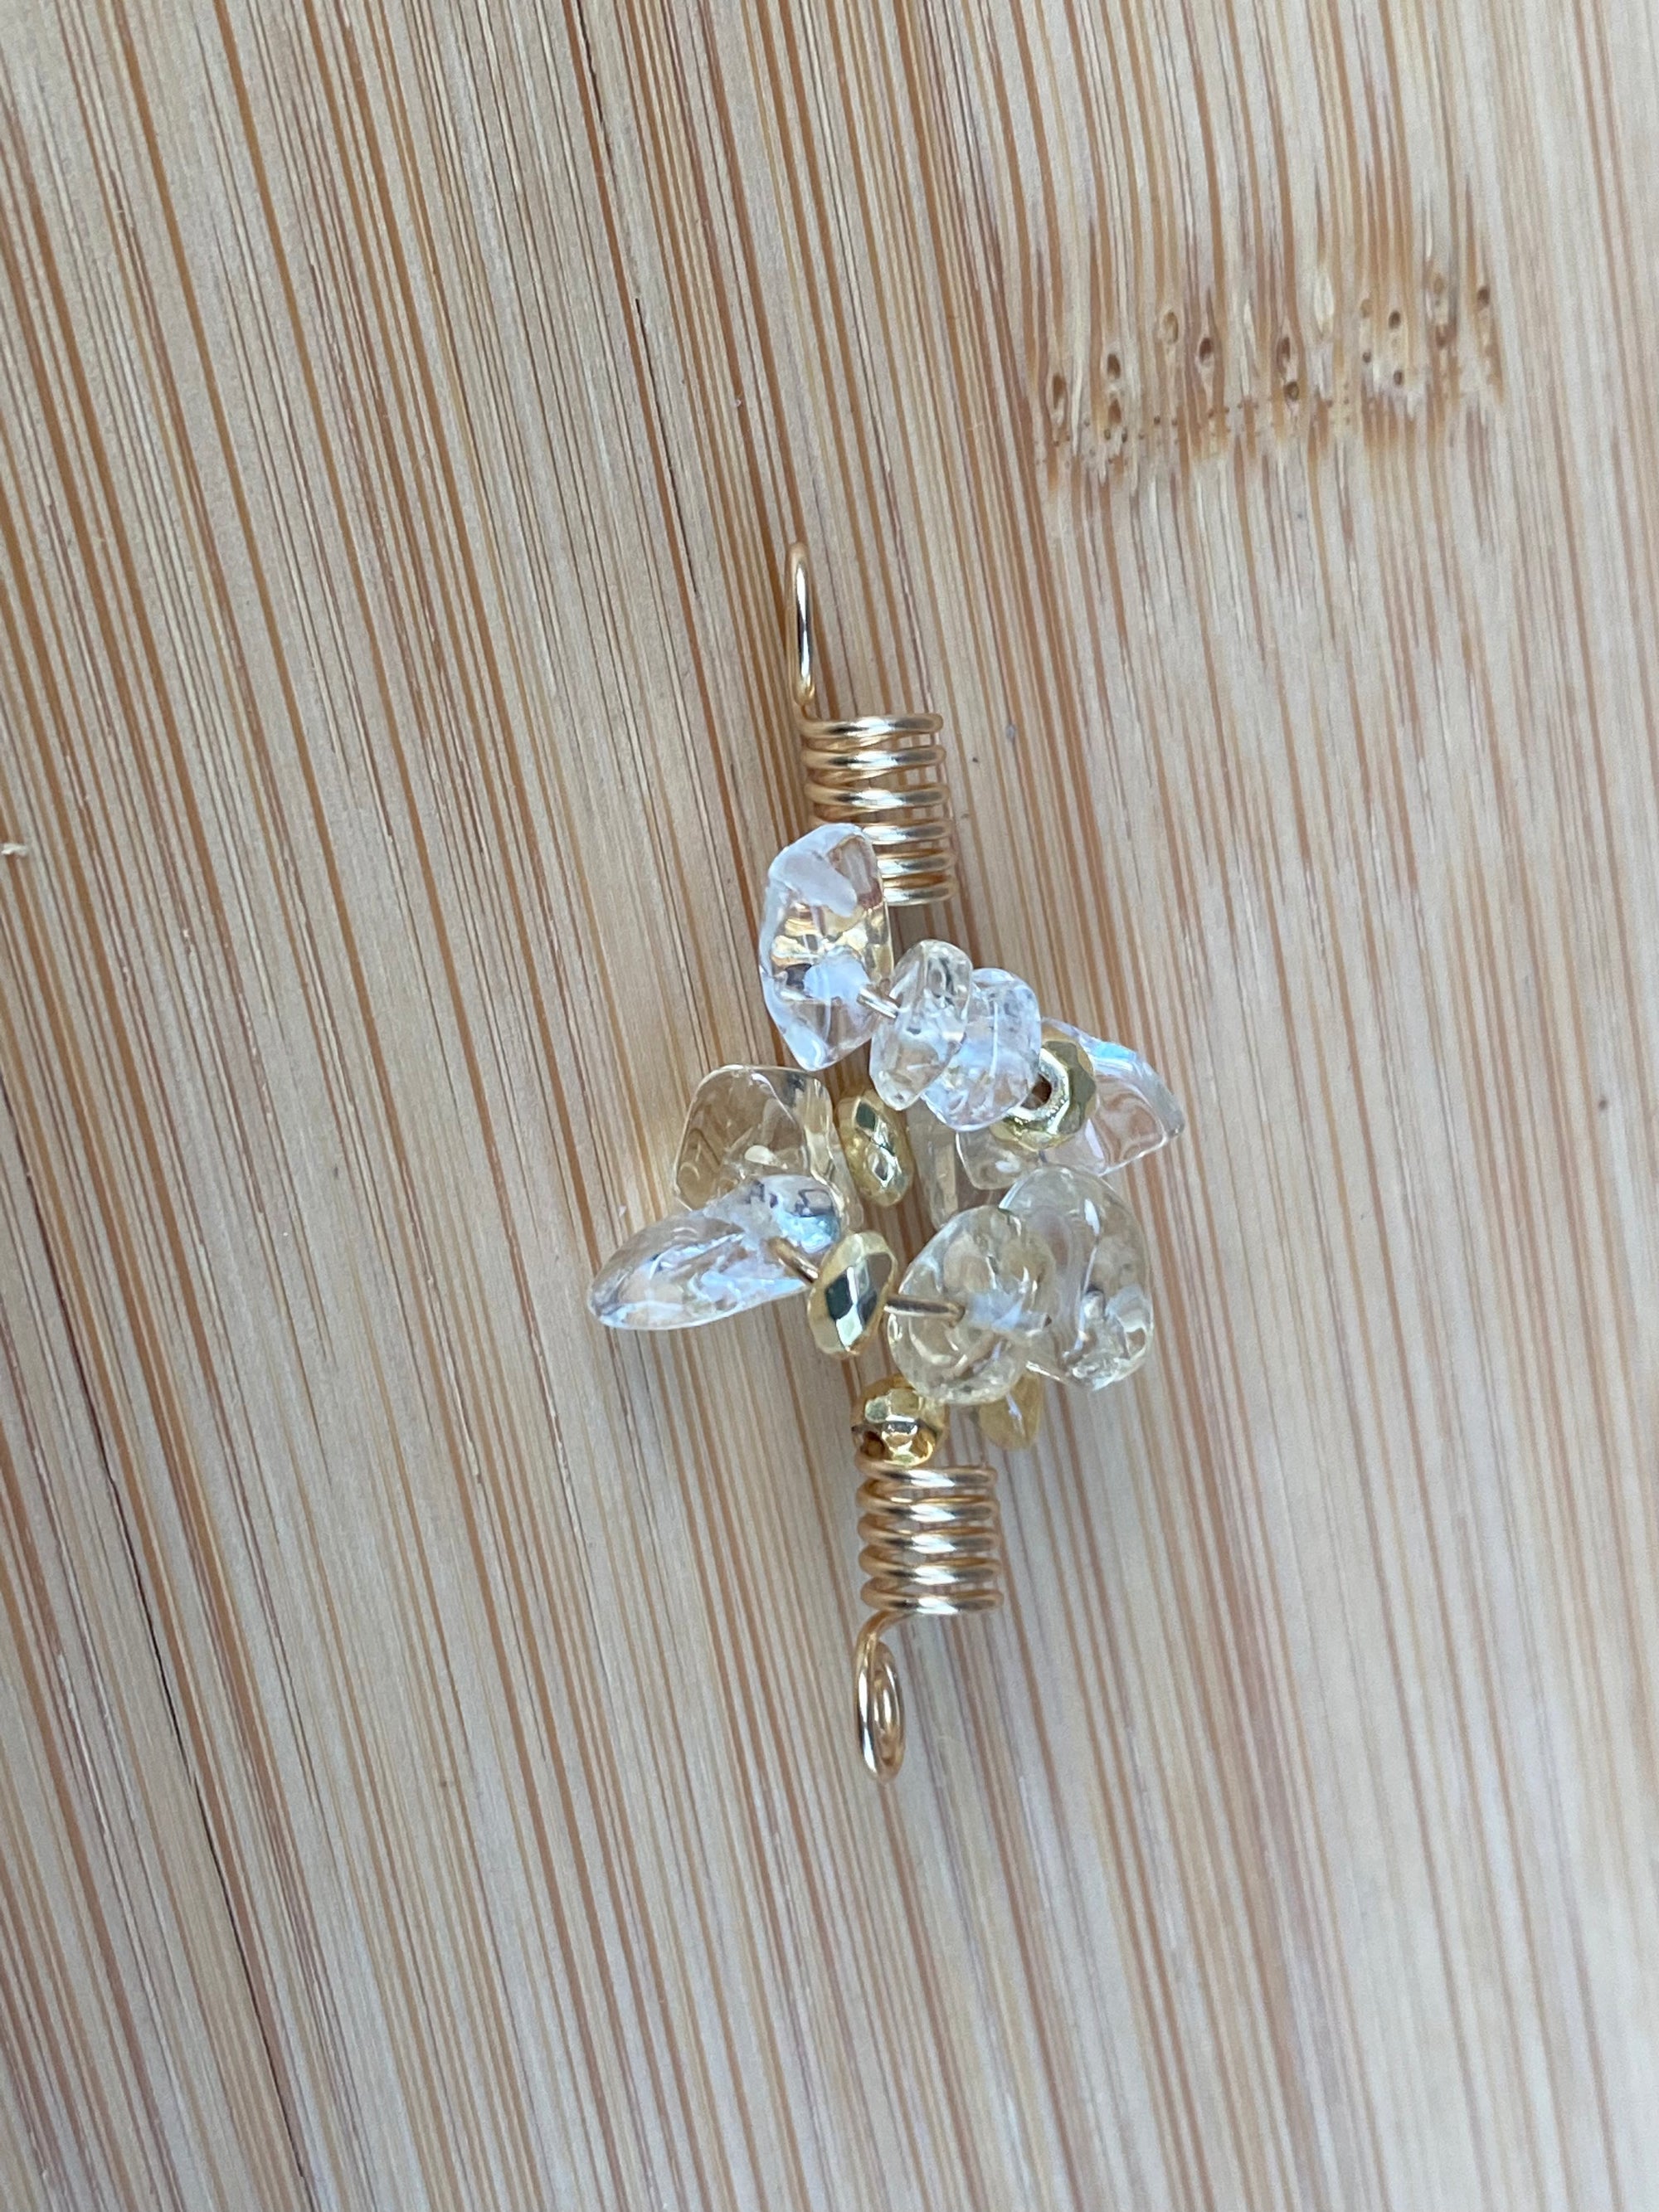 Crystal Loc Jewelry – Febe Loc Kingdom